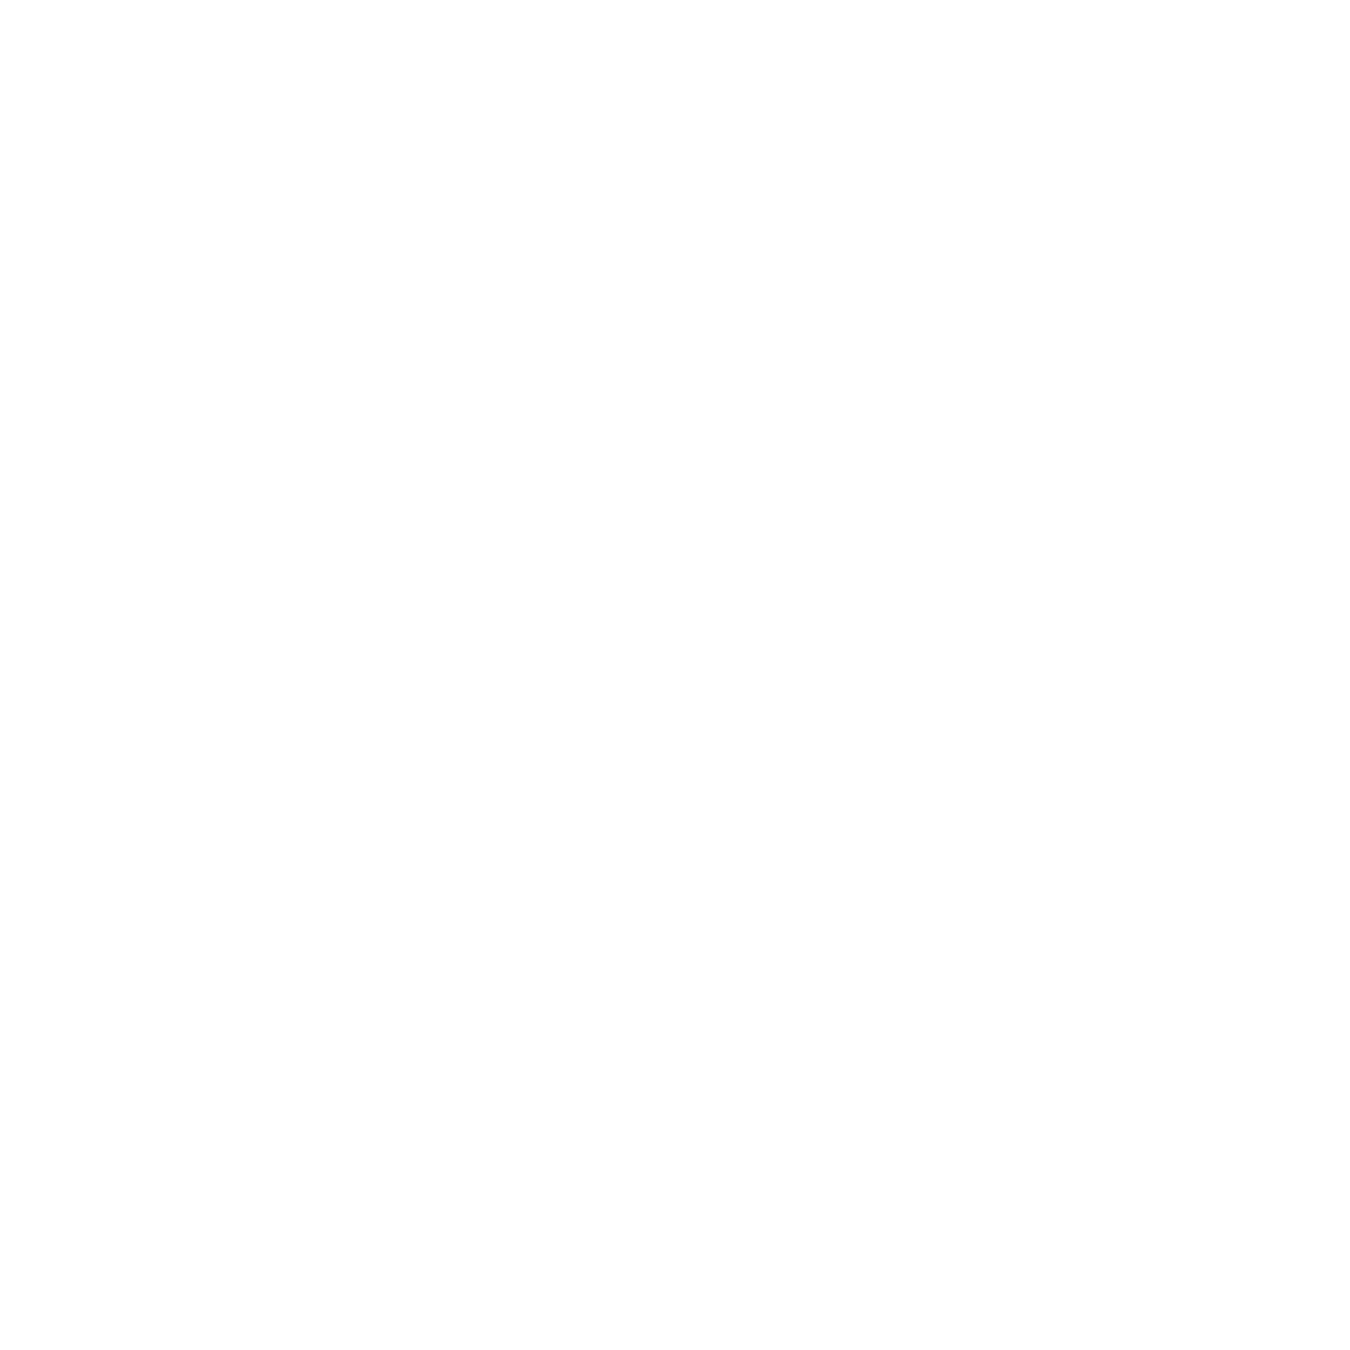 Nick Hall - Seattle